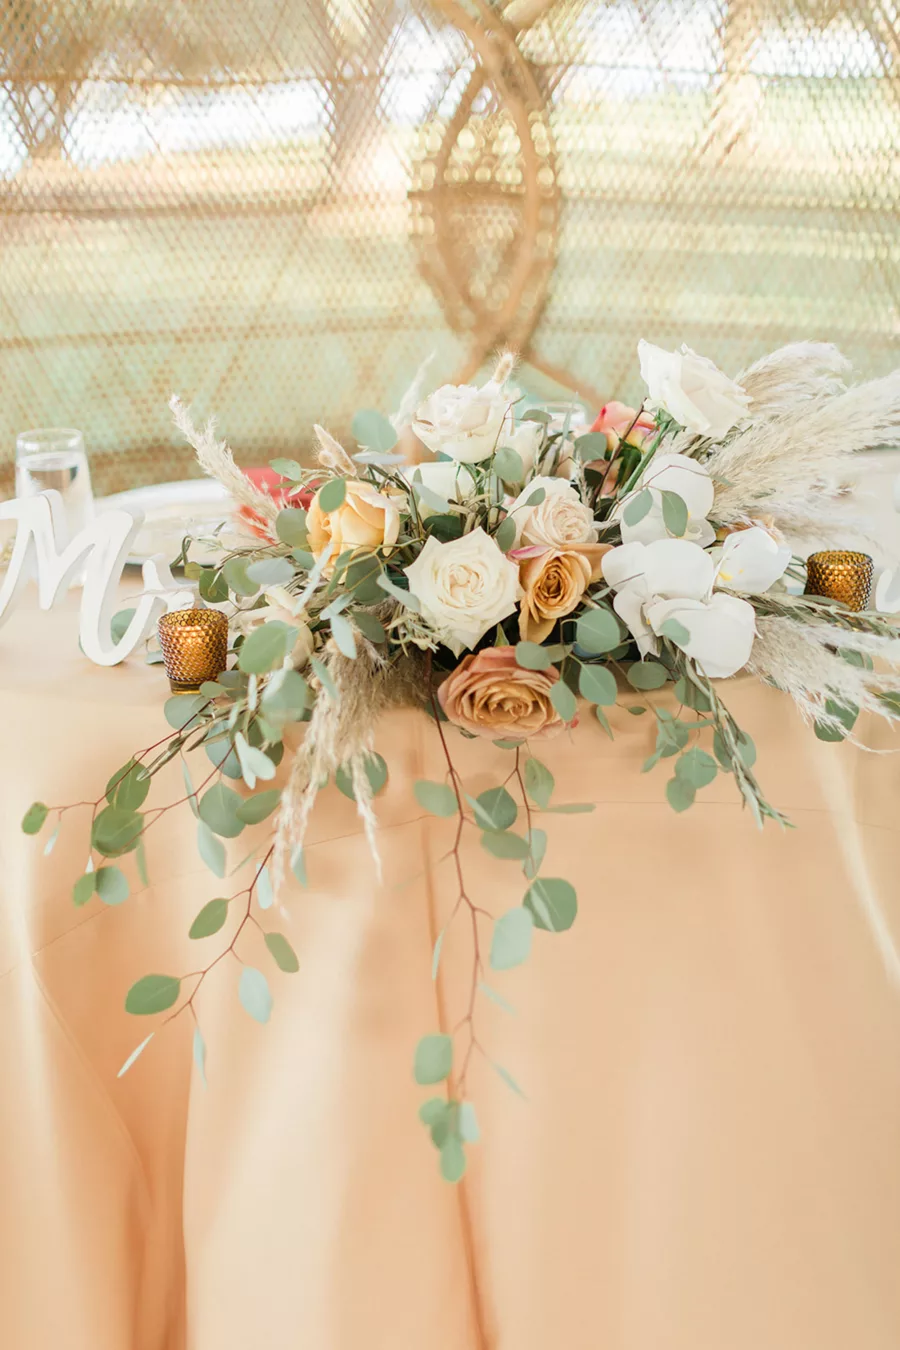 Boho Wedding Reception Sweetheart Table Flower Arrangement Ideas | White and Orange Roses, Pampas Grass, and Eucalyptus